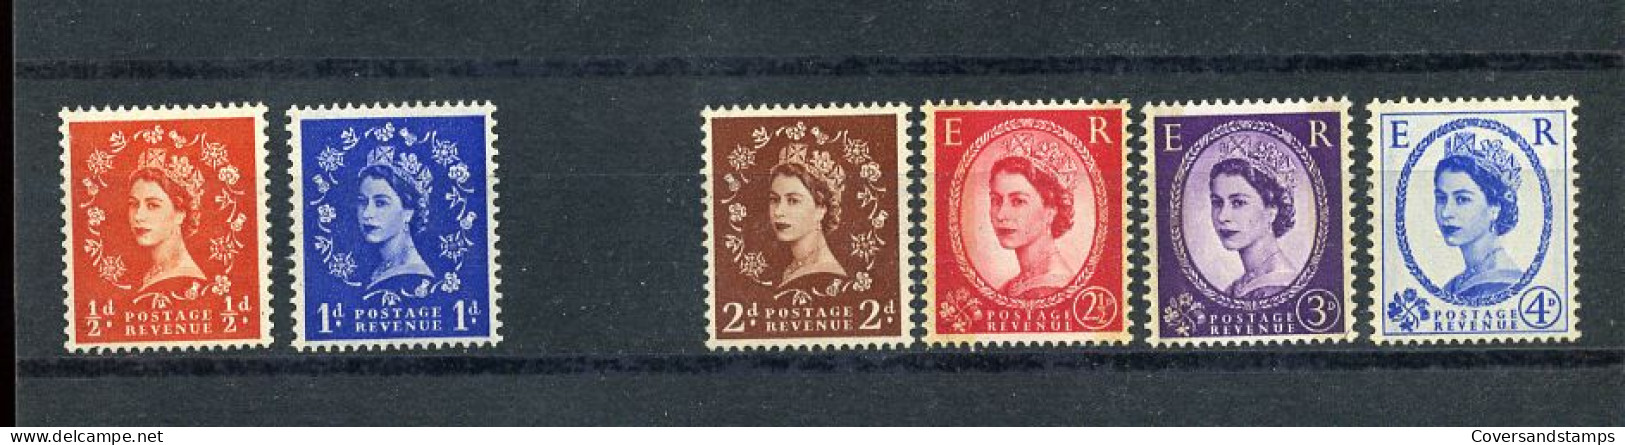 Groot-Brittannië - Lotje - MH - Unused Stamps